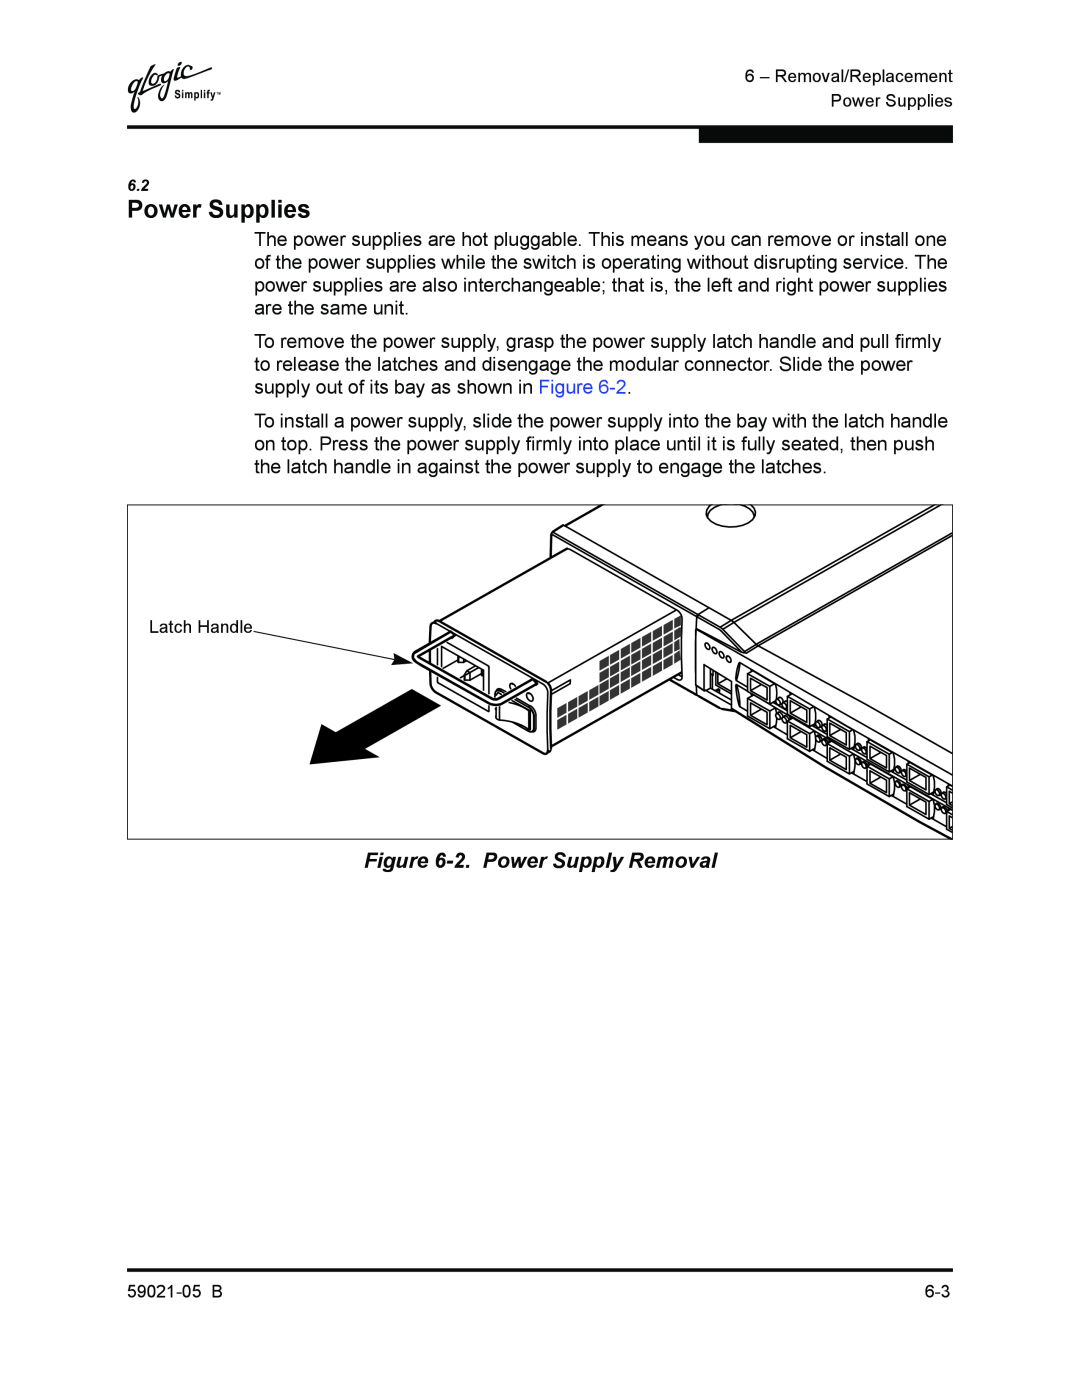 Q-Logic 59021-05 B manual 2. Power Supply Removal, Power Supplies 